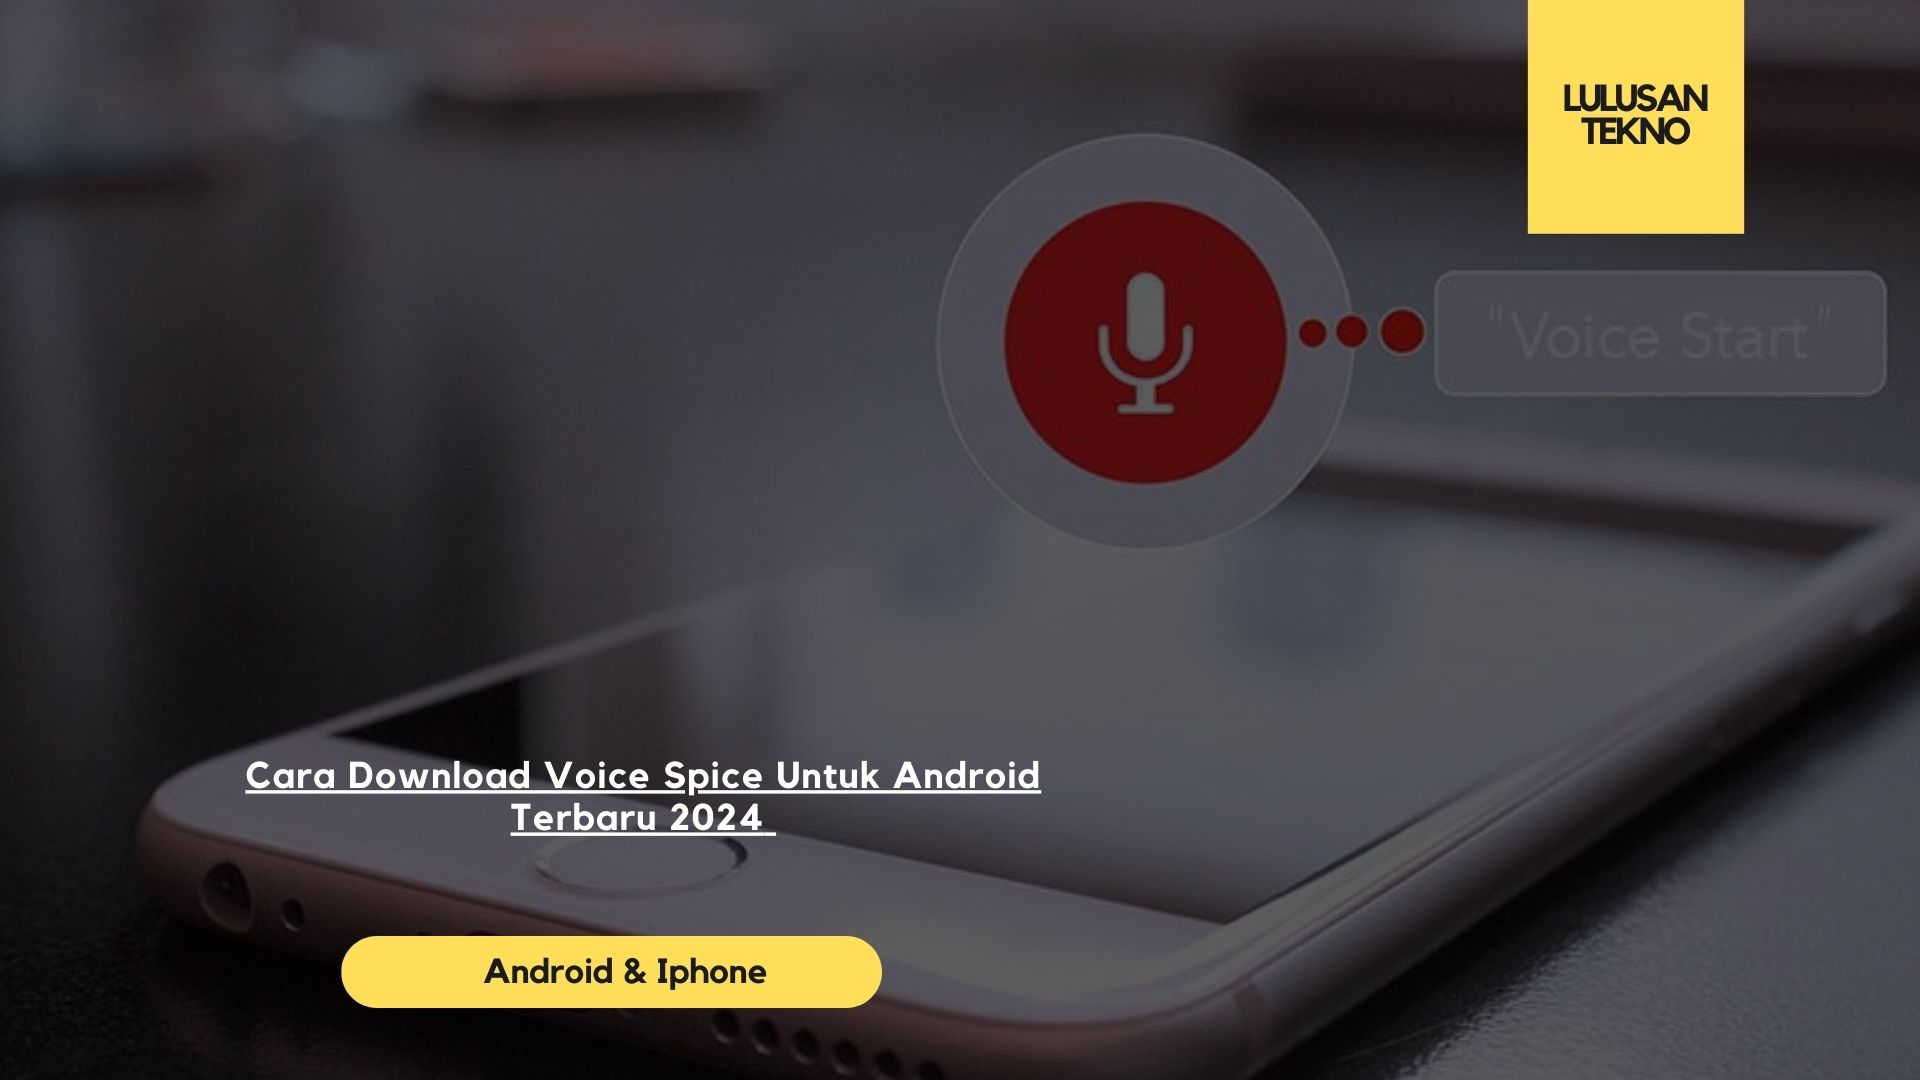 Cara Download Voice Spice Untuk Android Terbaru 2024